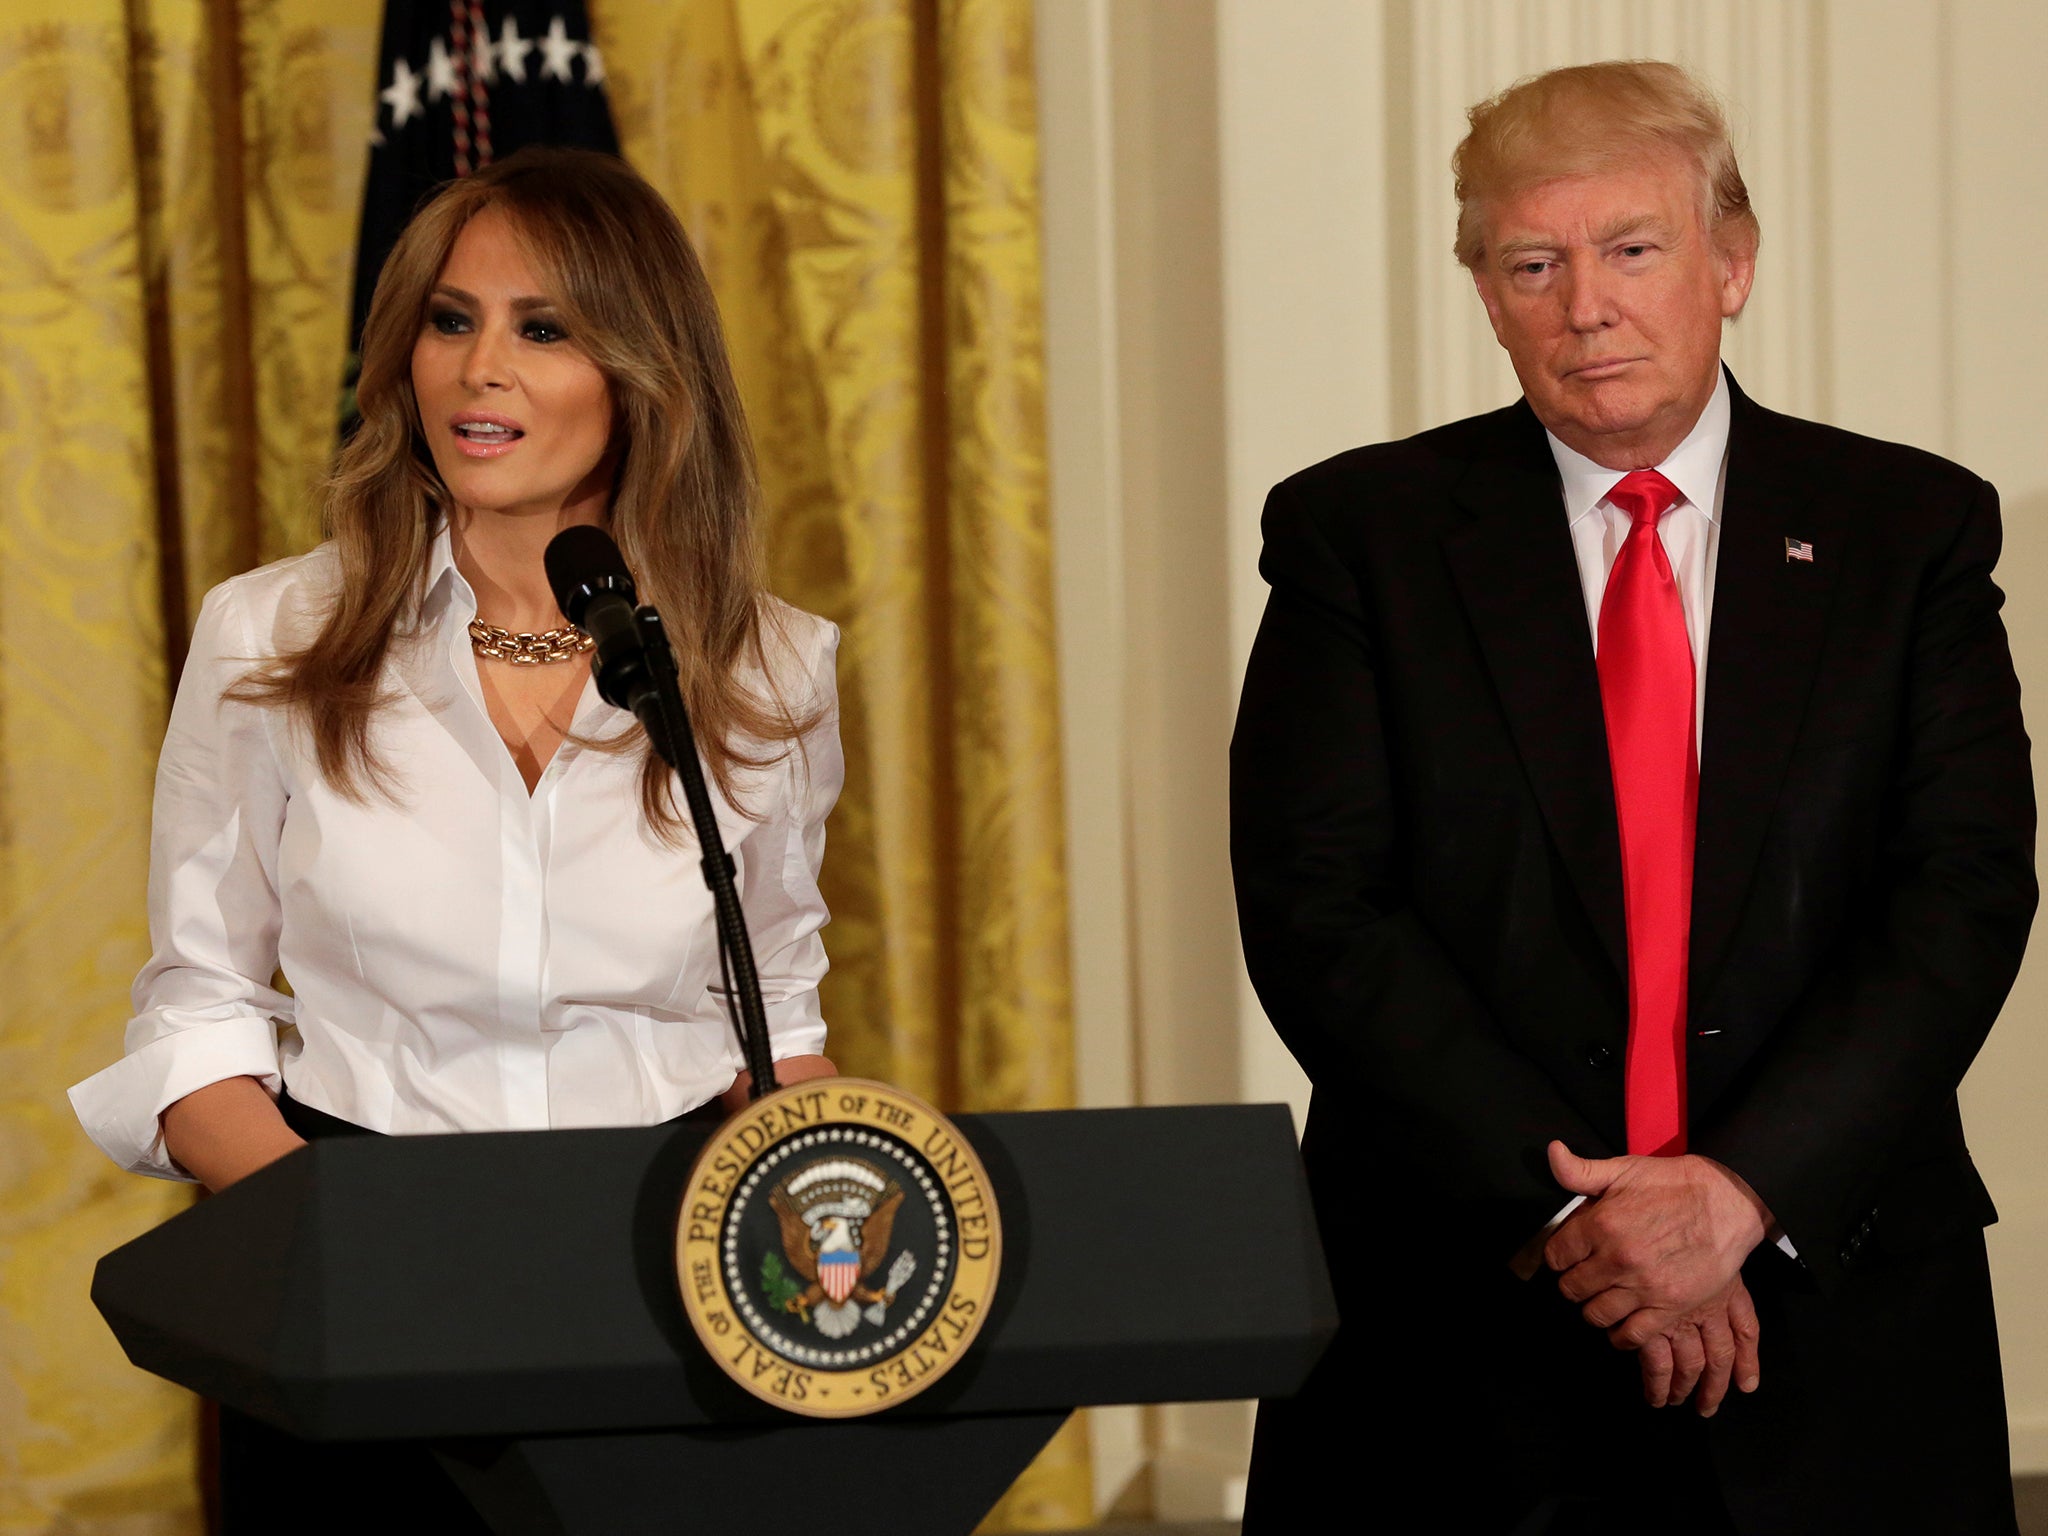 Melania Trump has reportedly said Sean Spicer is doing a bad job as White House press secretary